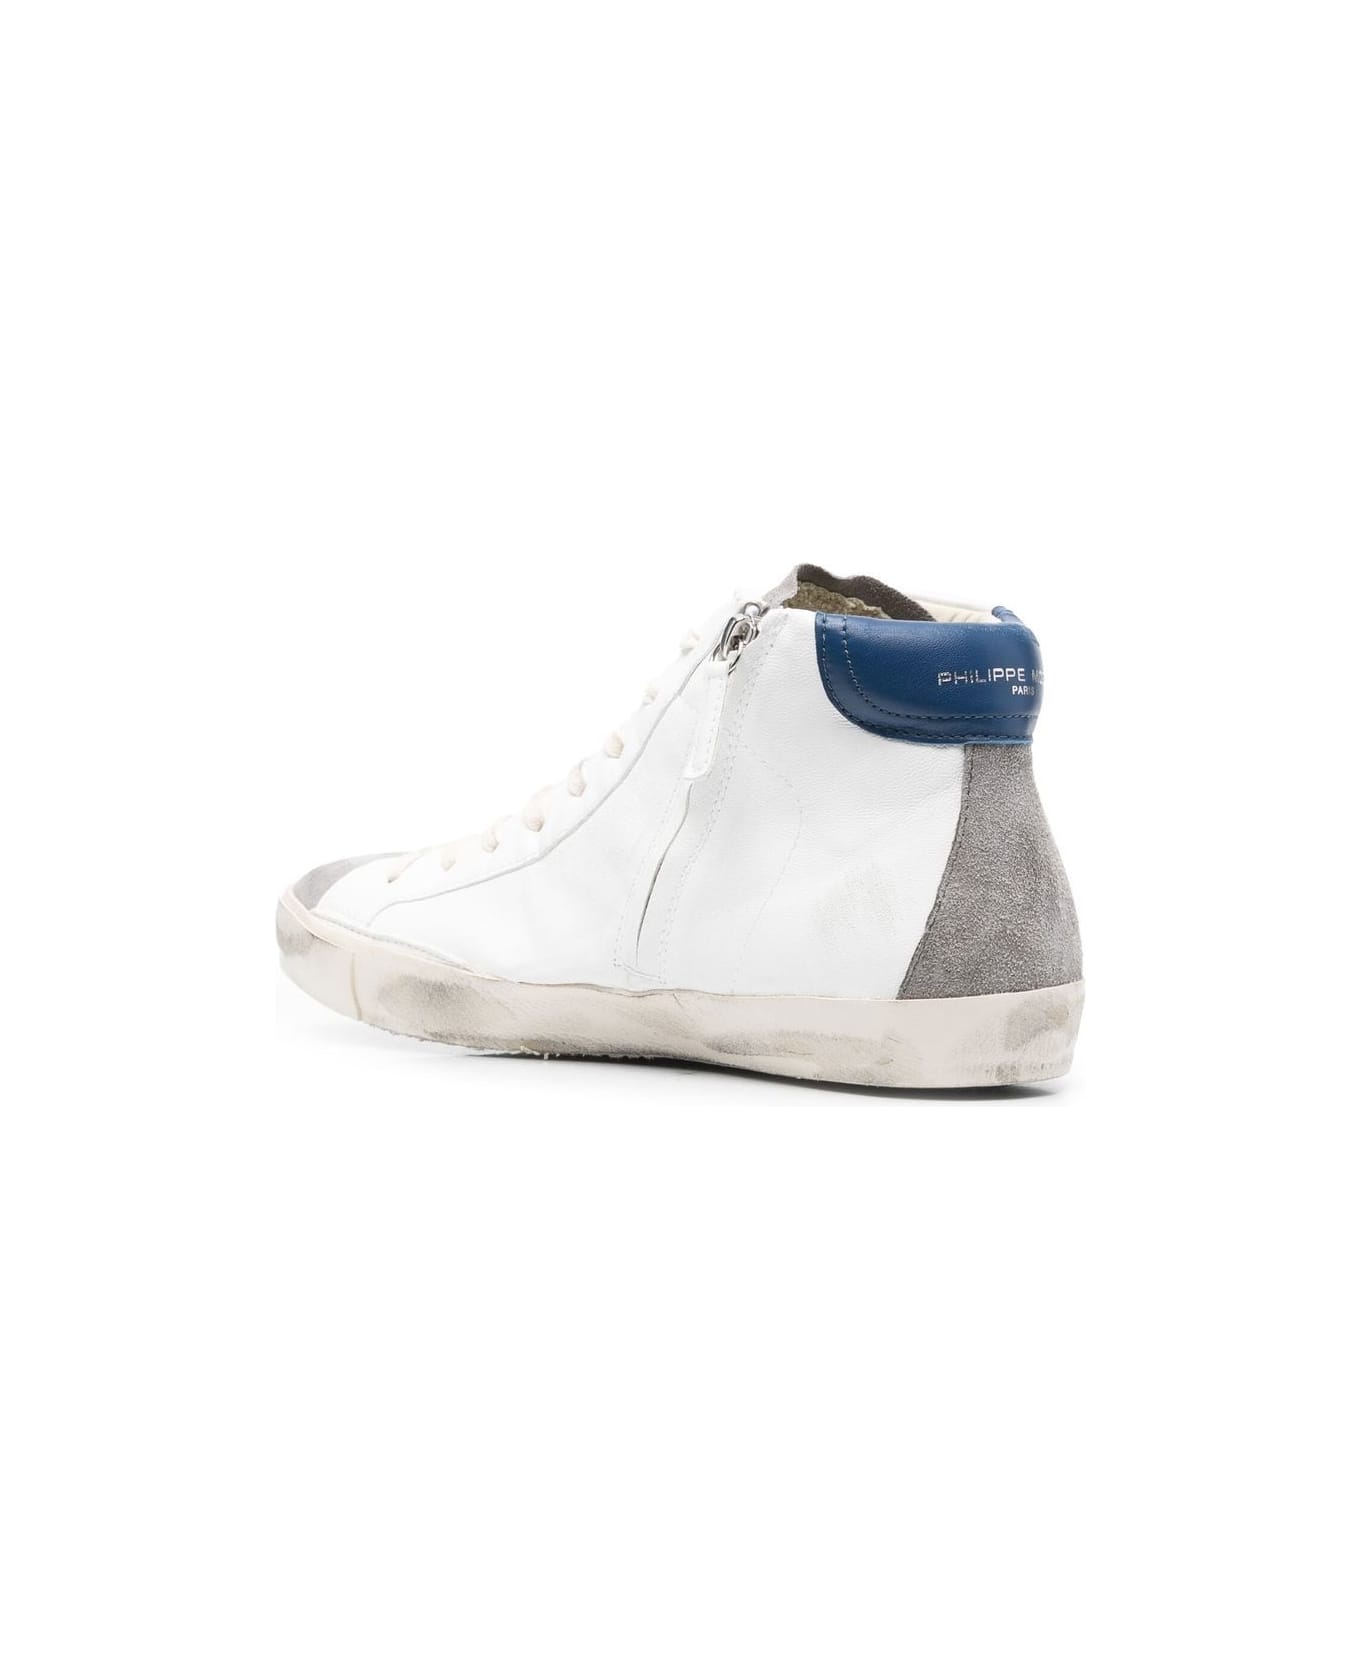 Philippe Model Prsx High Man Sneakers - Vintage Mixage Blanc Gris